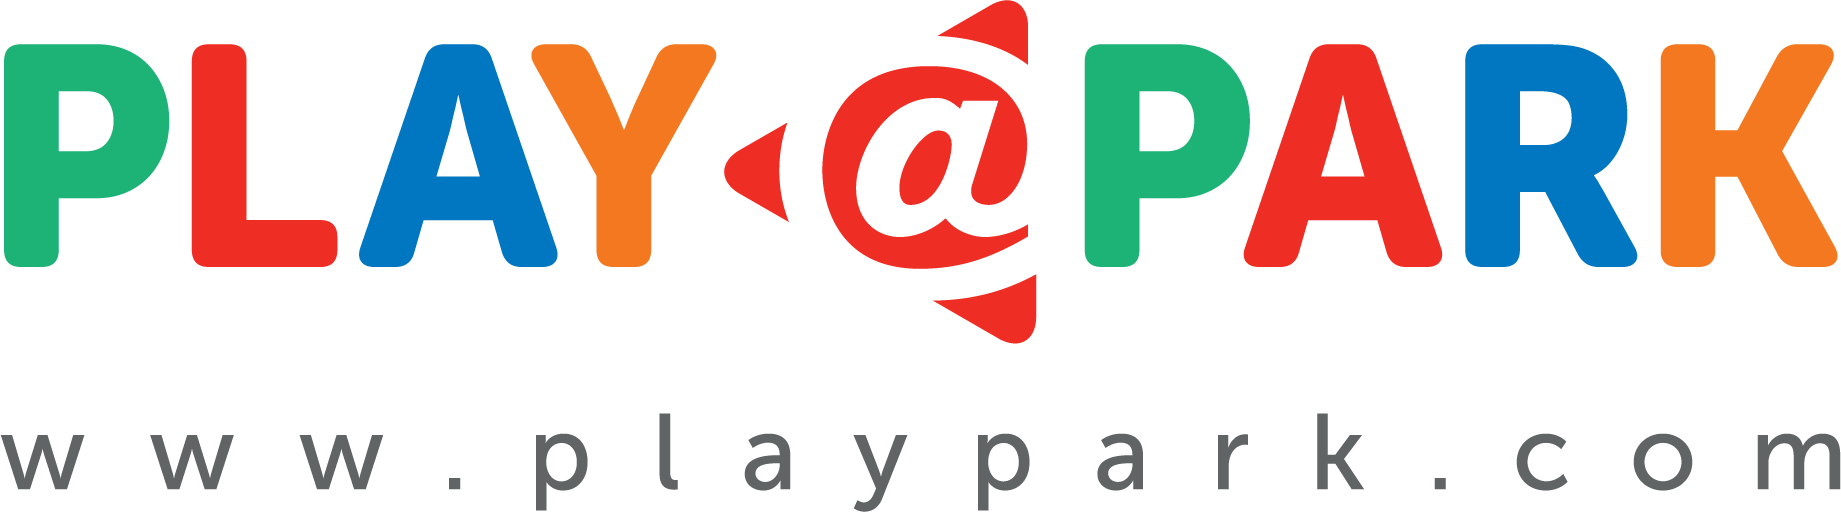 Playpark. Плей парк. Playpark logo. Playpark Анохина. Идея парк логотип.